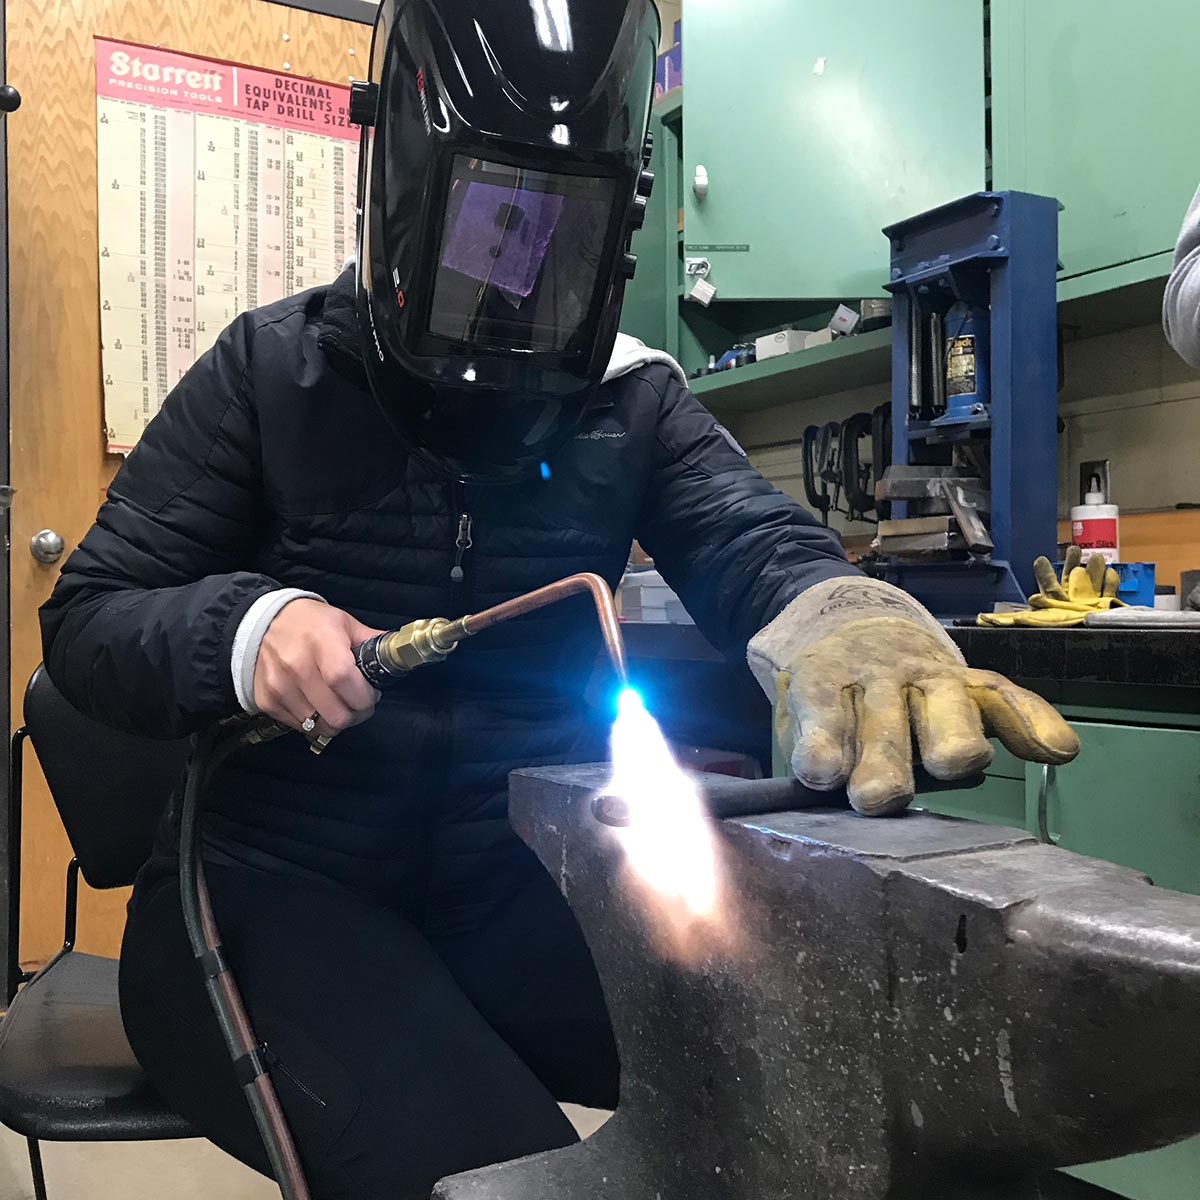 Student club member welding